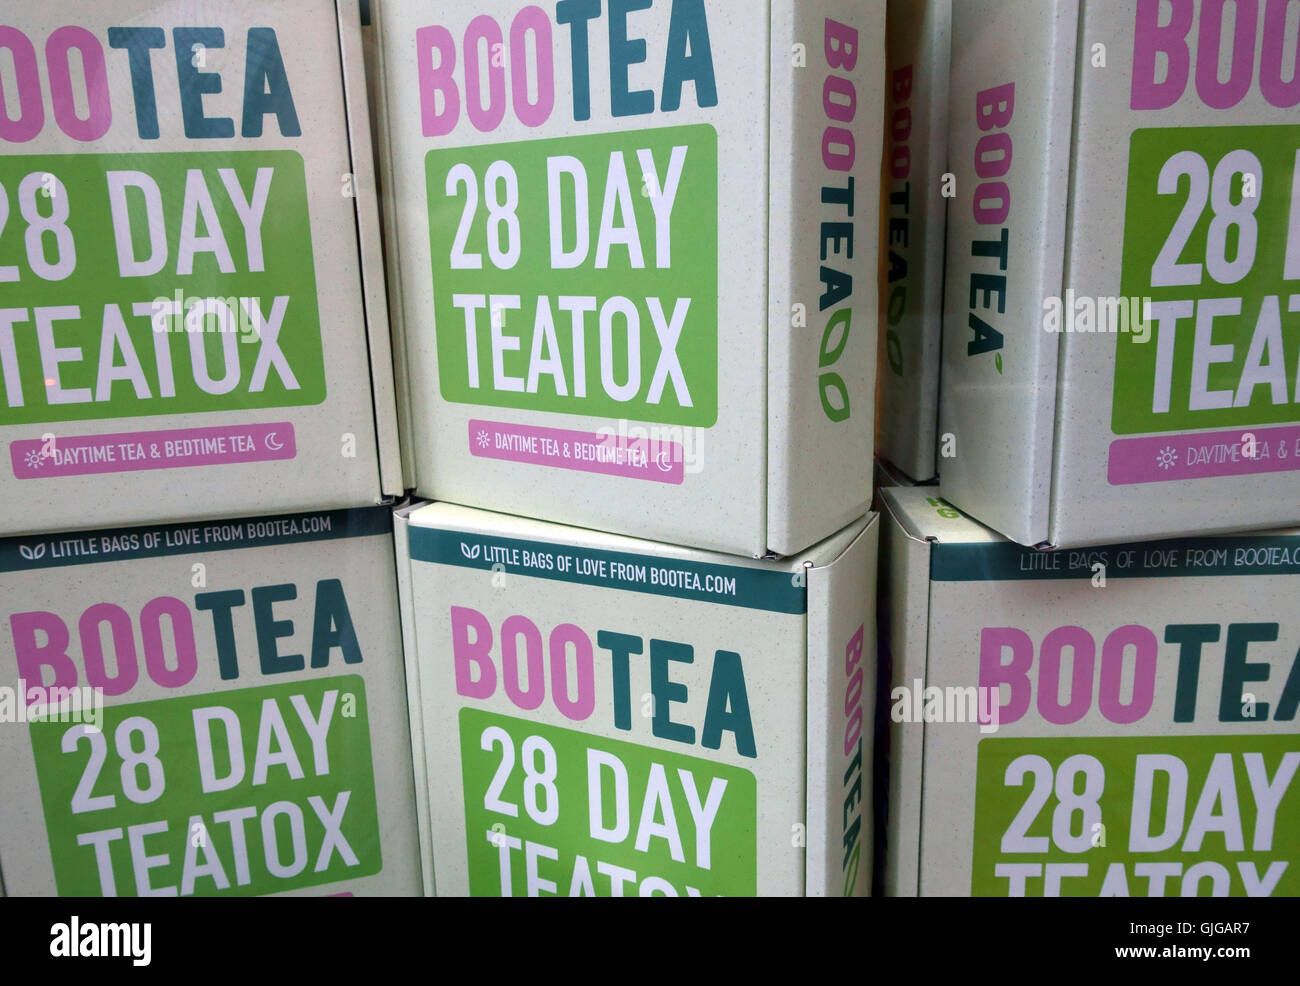 Bootea 28 day detox tea in health food shop display, London Stock Photo -  Alamy